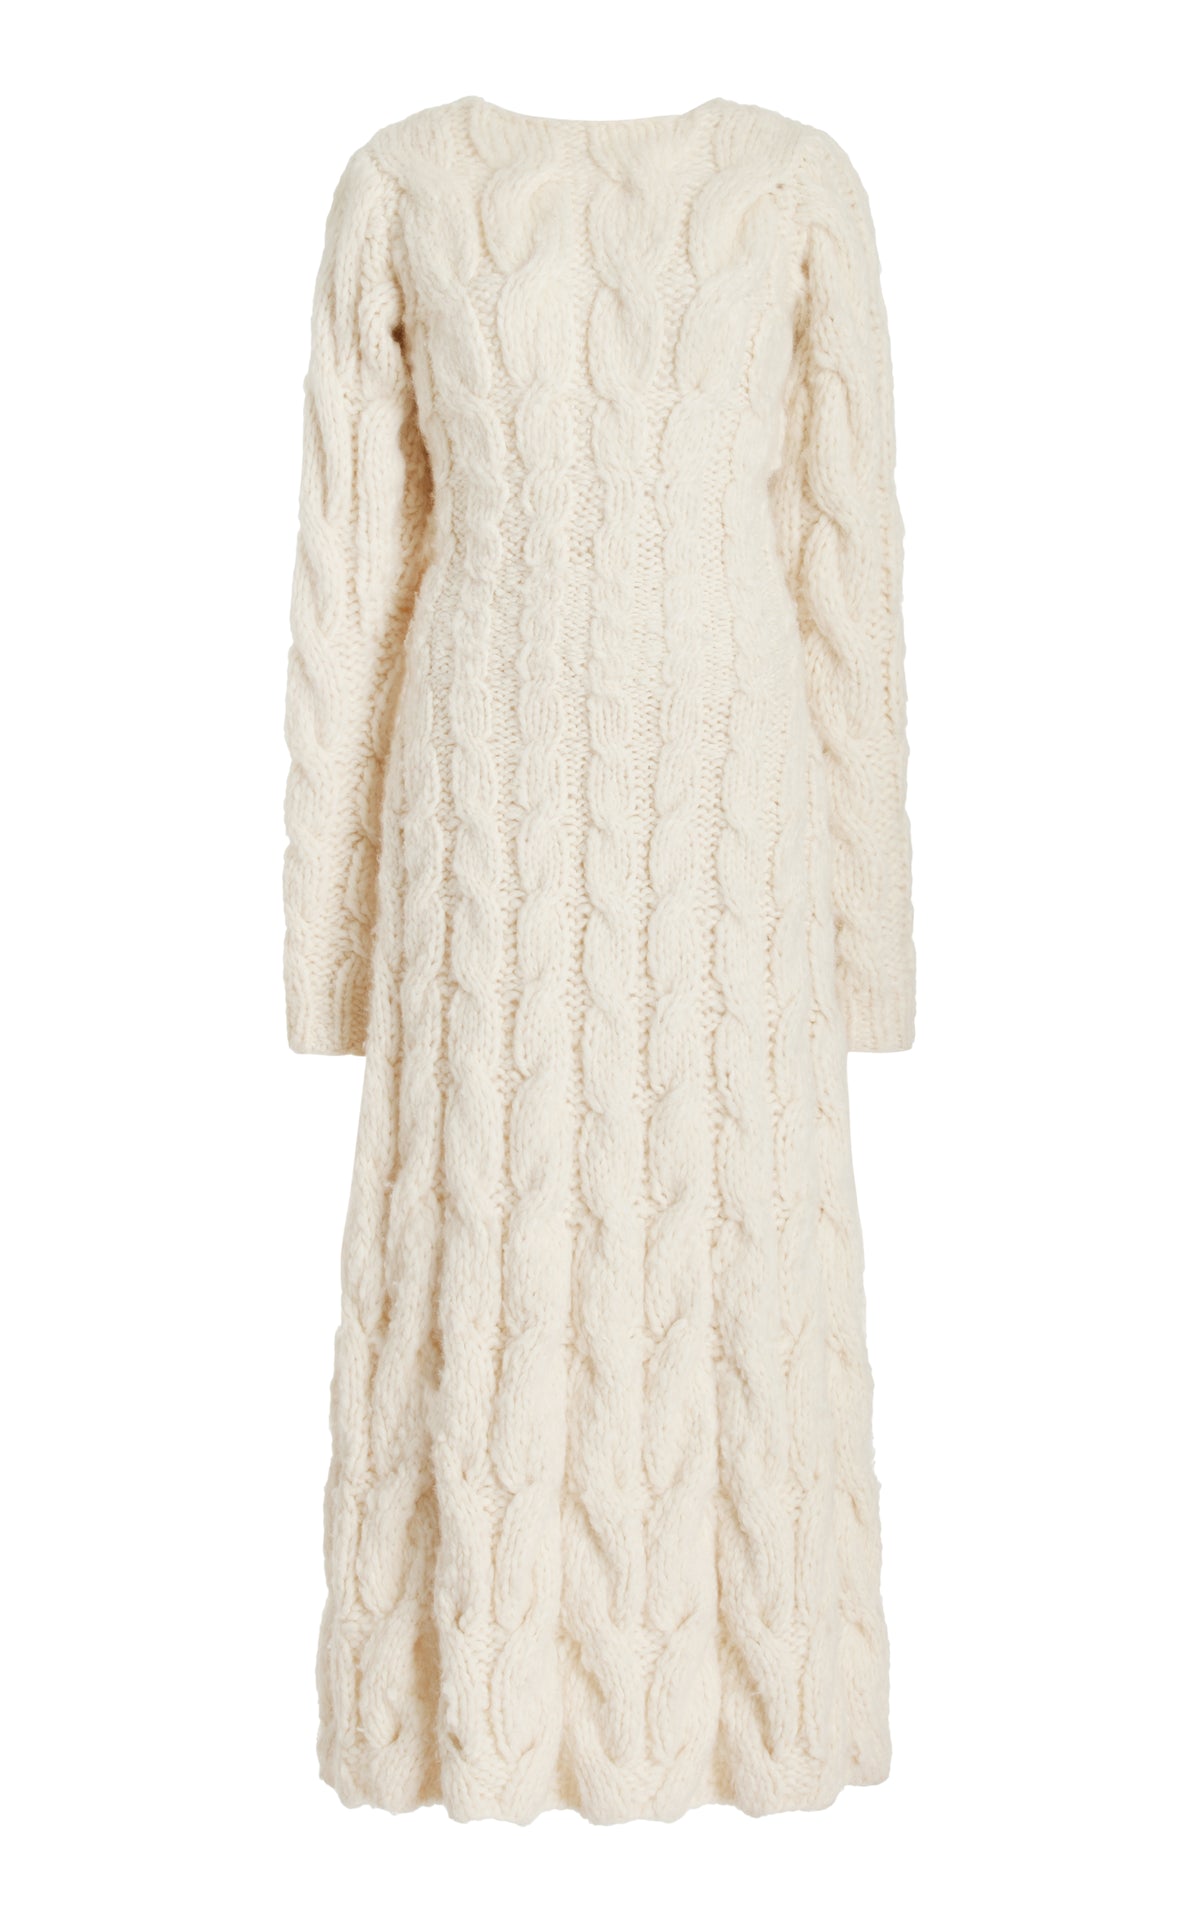 Poppy Dress in Ivory Welfat Cashmere